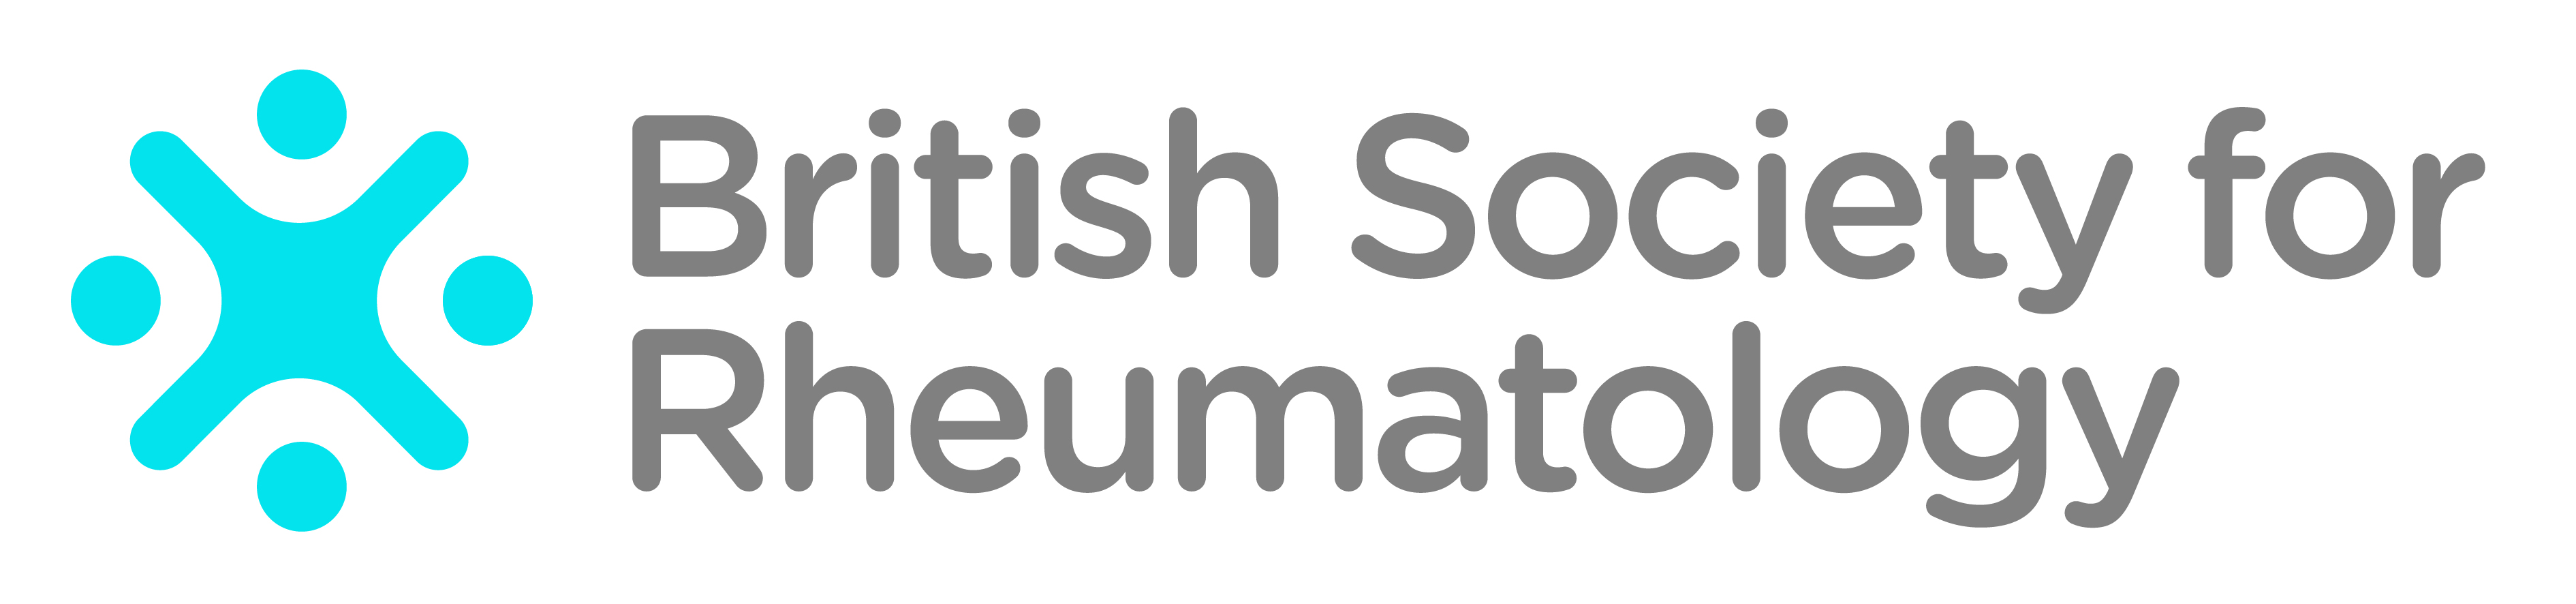 logo for British Society for Rheumatology